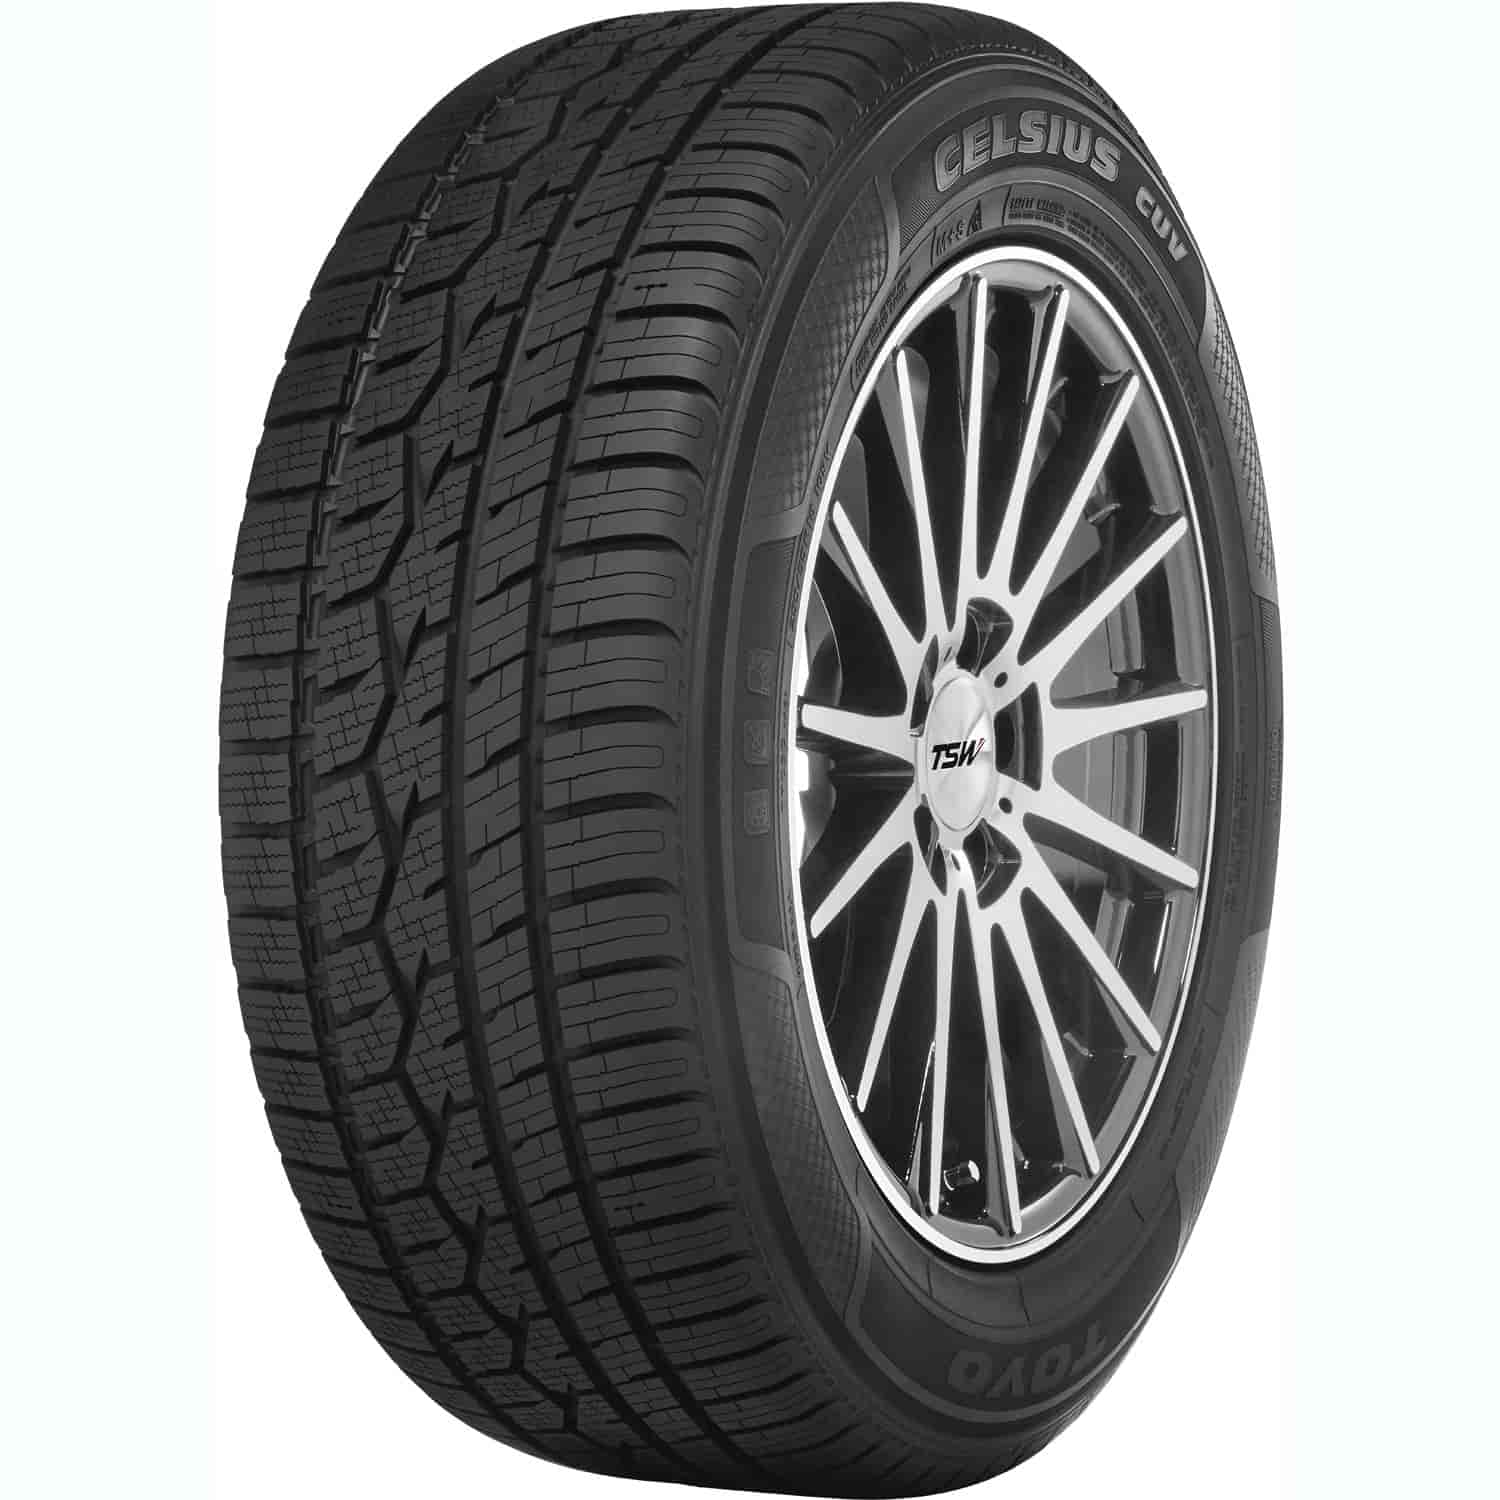 Celsius CUV Tire 225/55R18